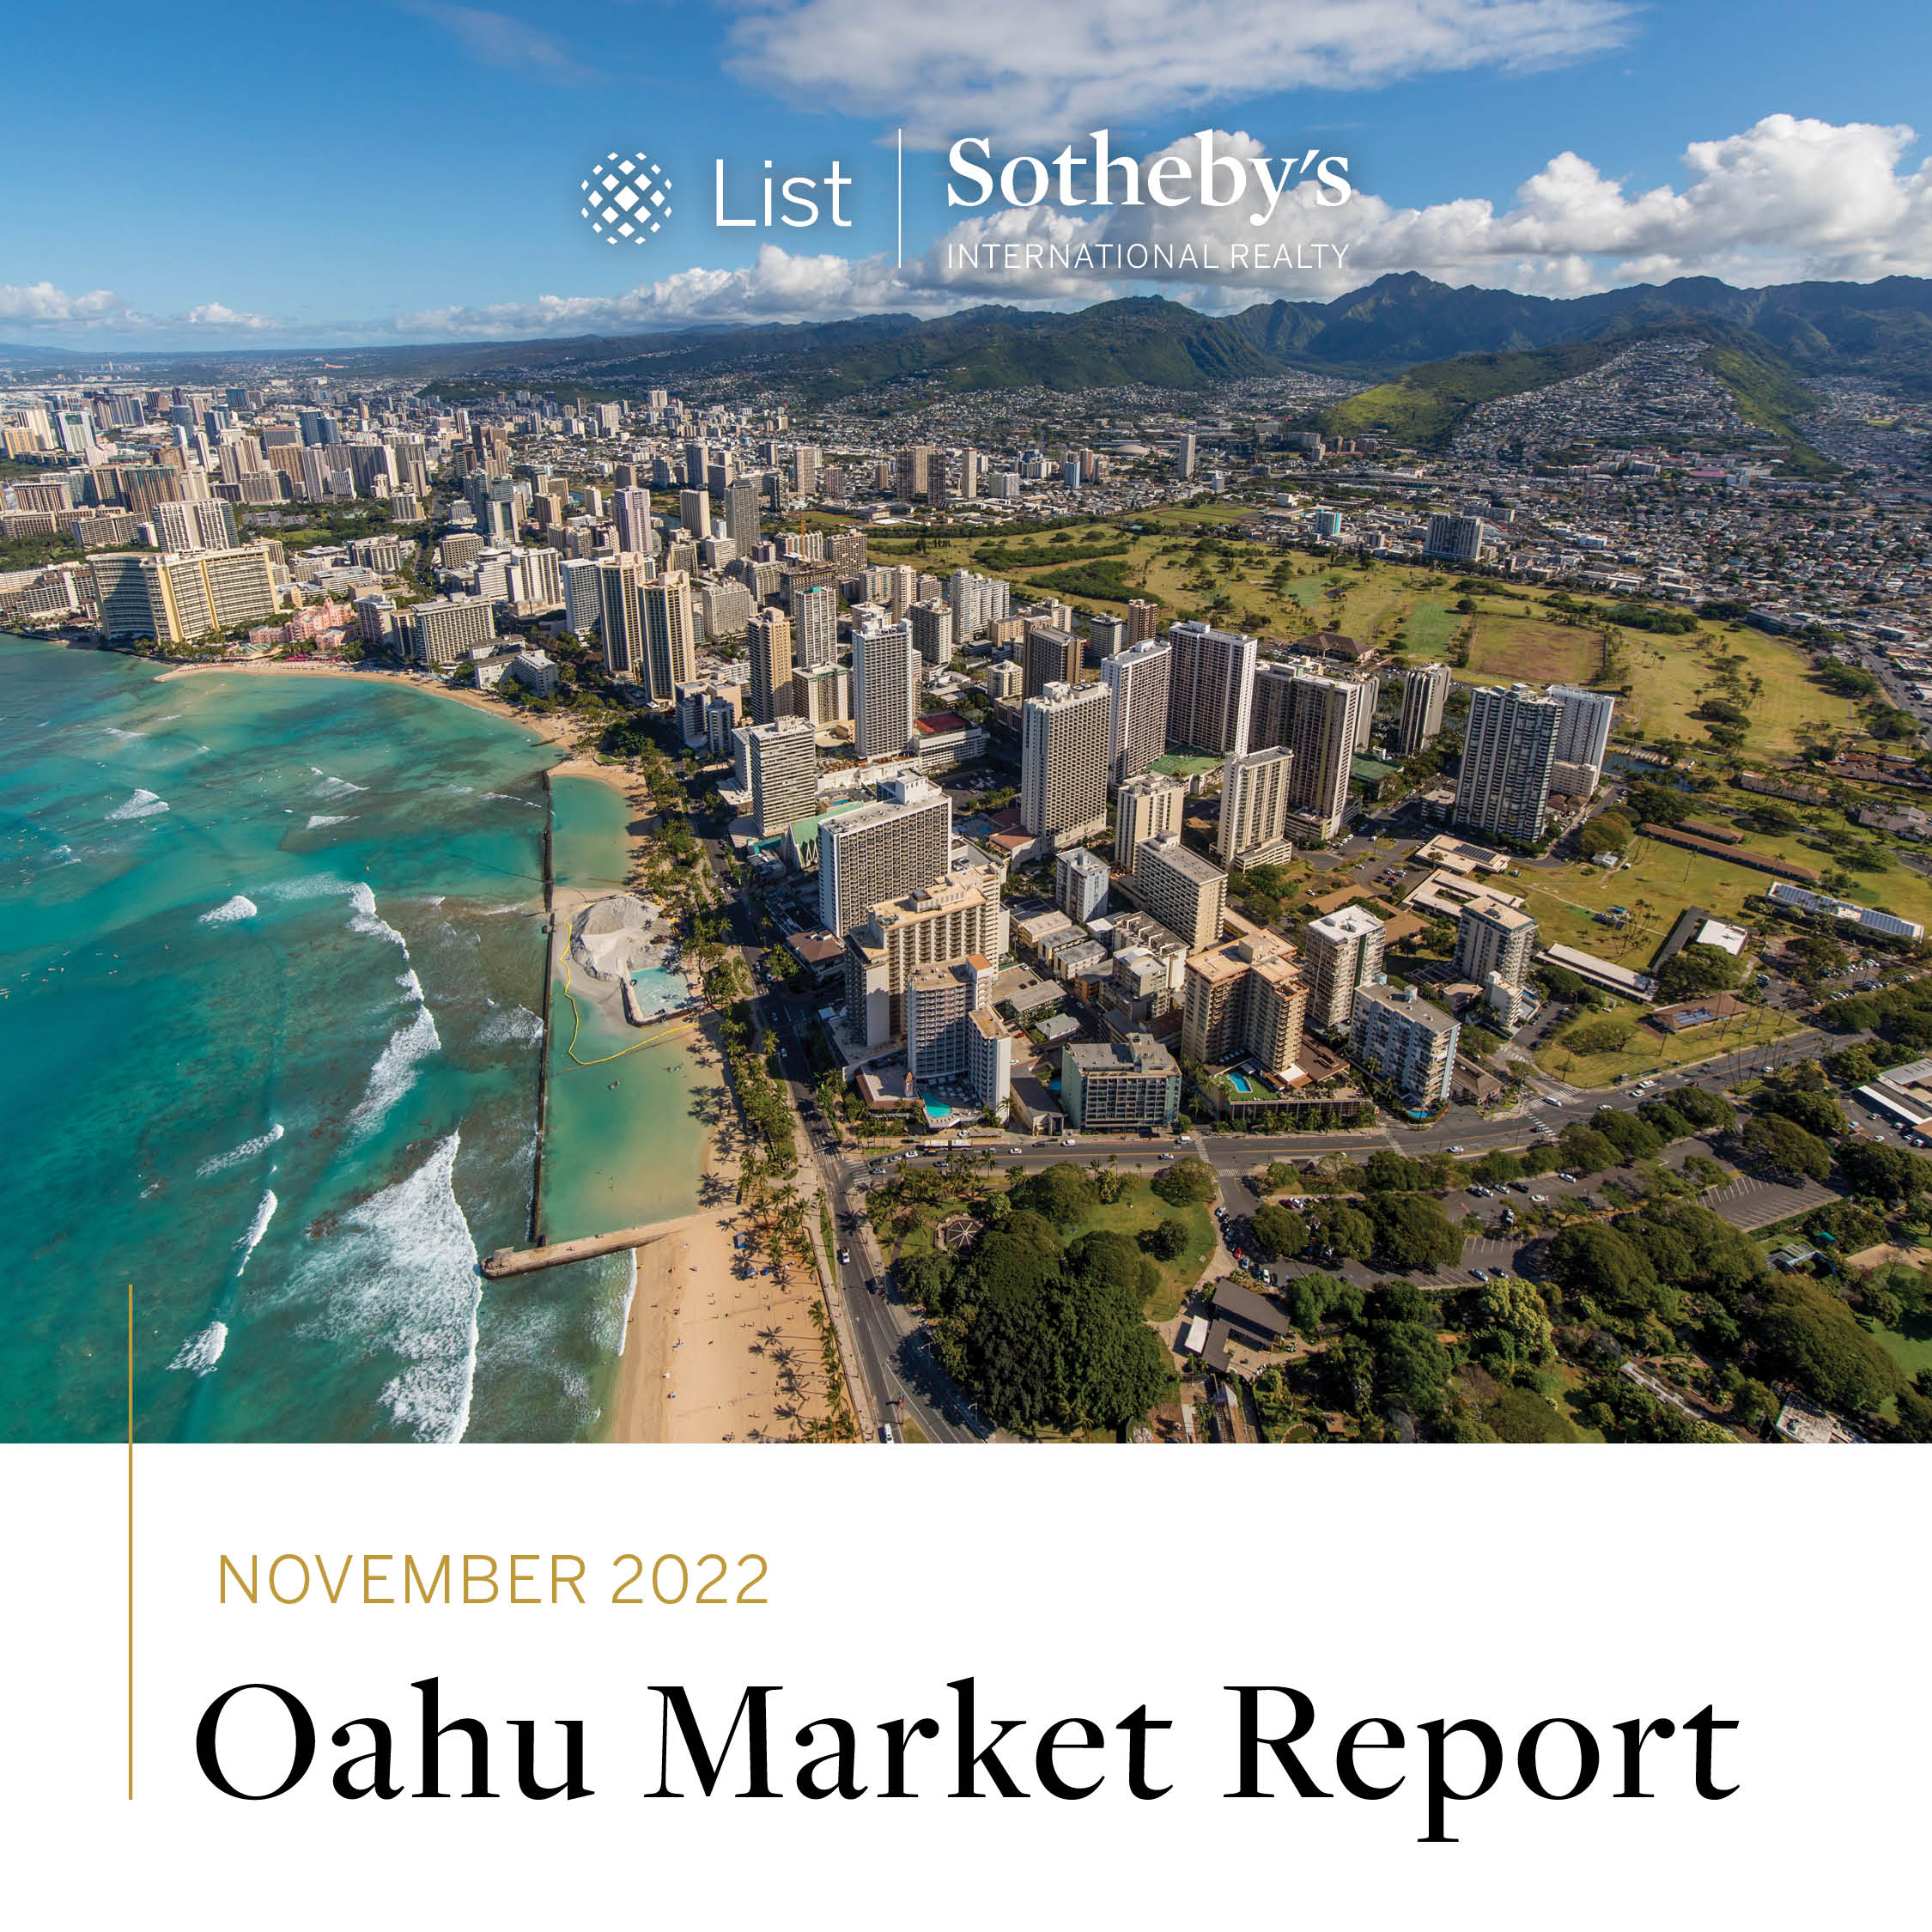 Overhead shot of Honolulu with title "Oahu Market Report November 2022"